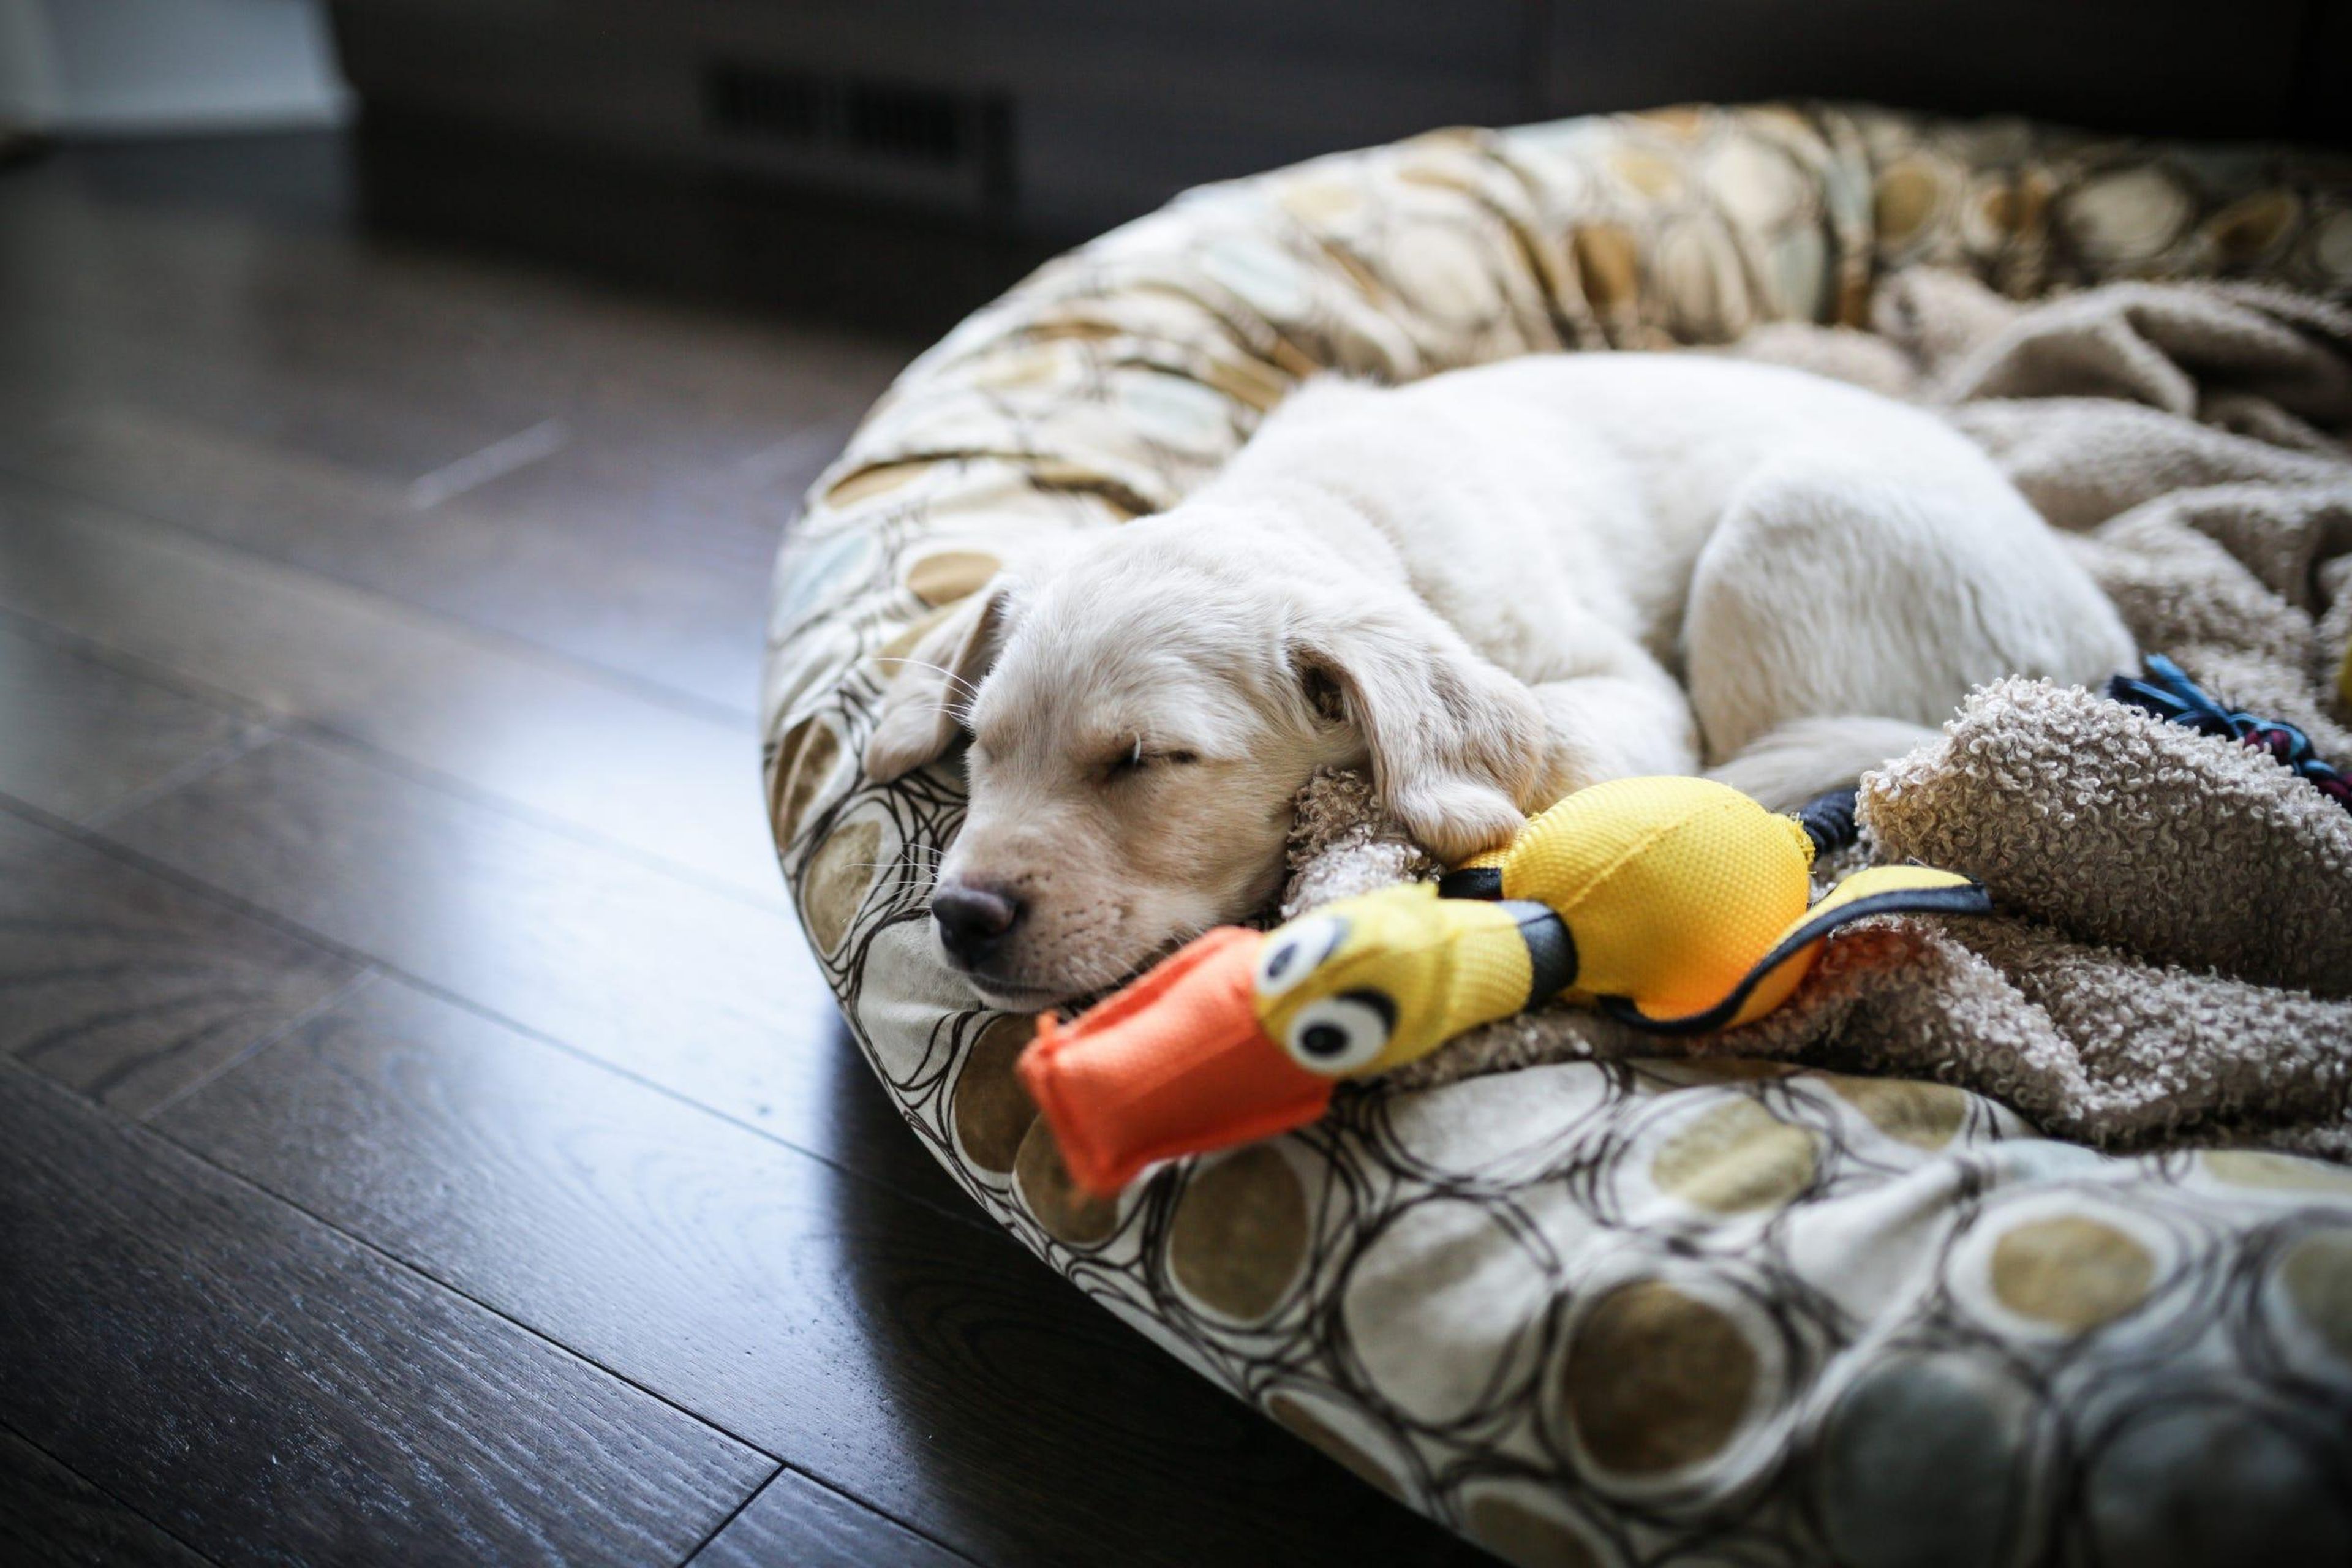 An 8-week-old golden labrador husky mix sleeps on a cushion. Angela Auclair/Getty